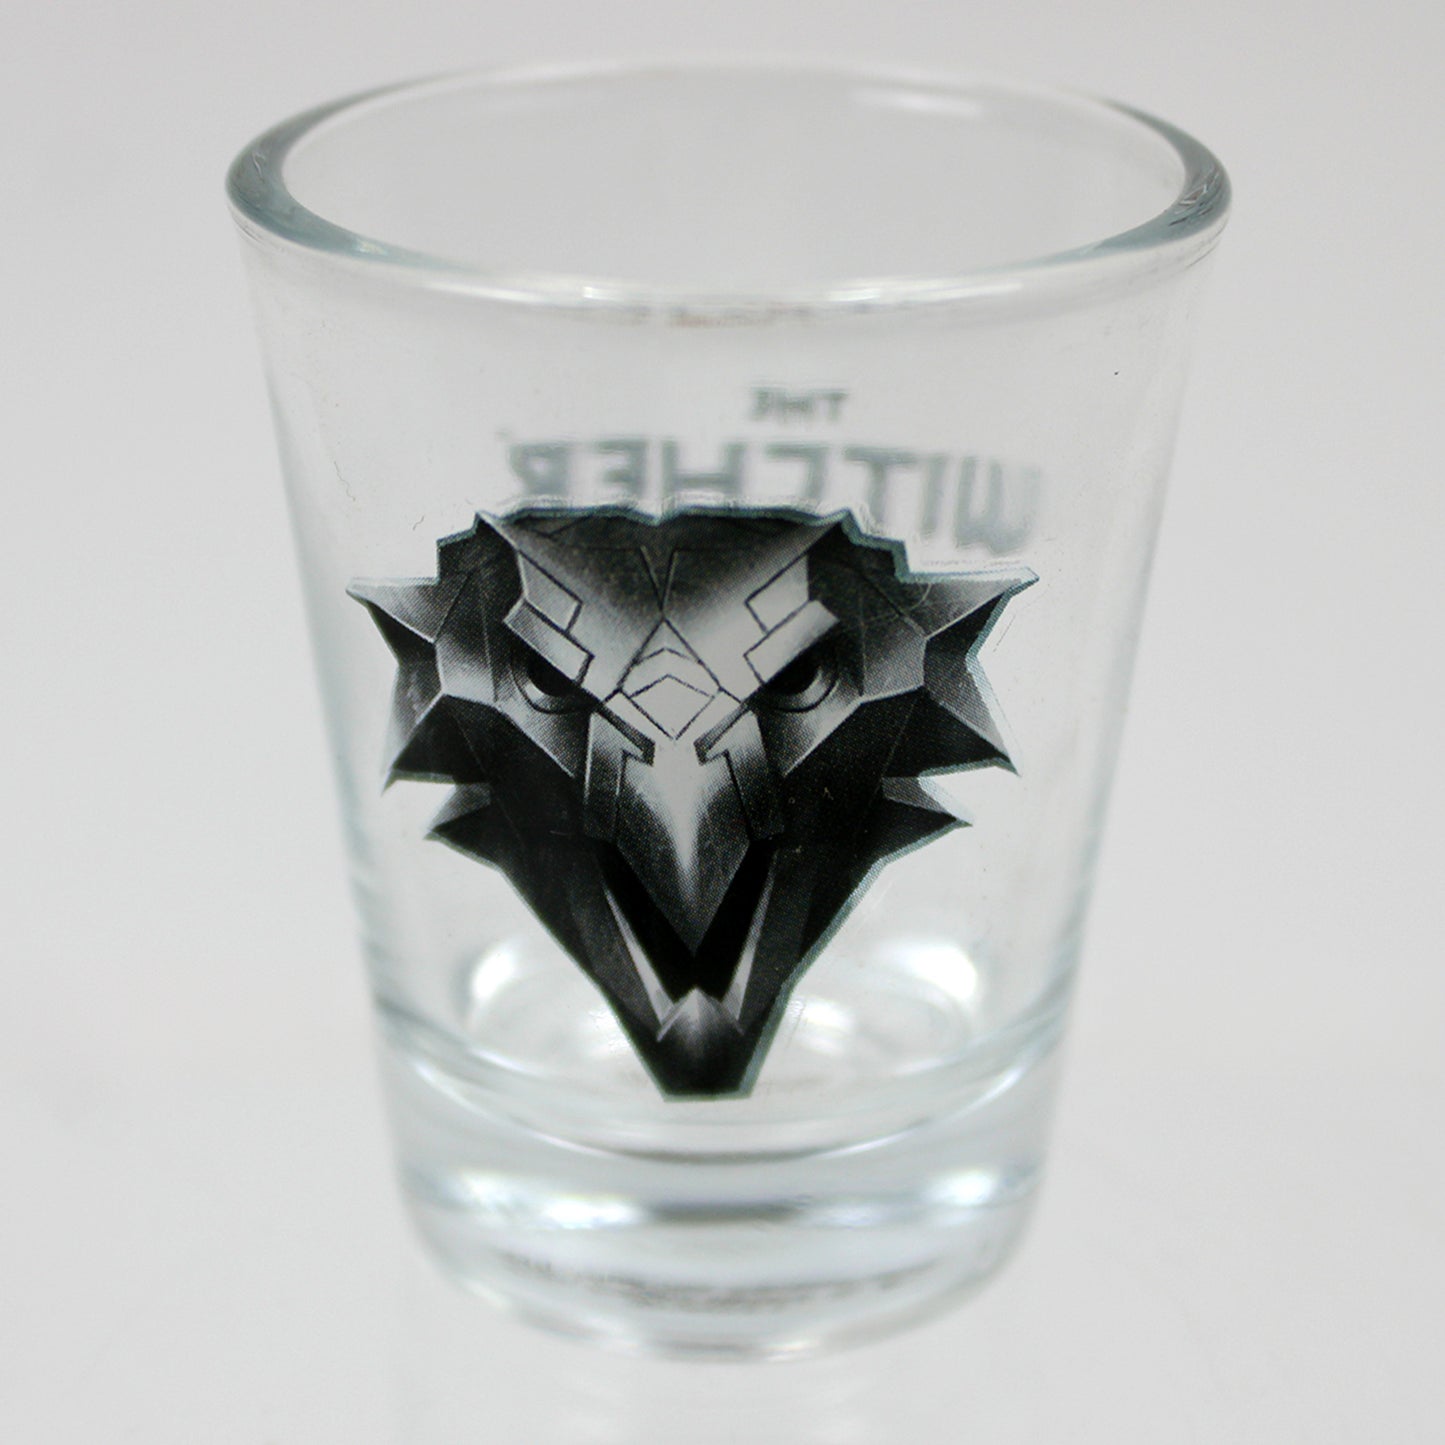 The Witcher 3: Wild Hunt Shot Glass Set